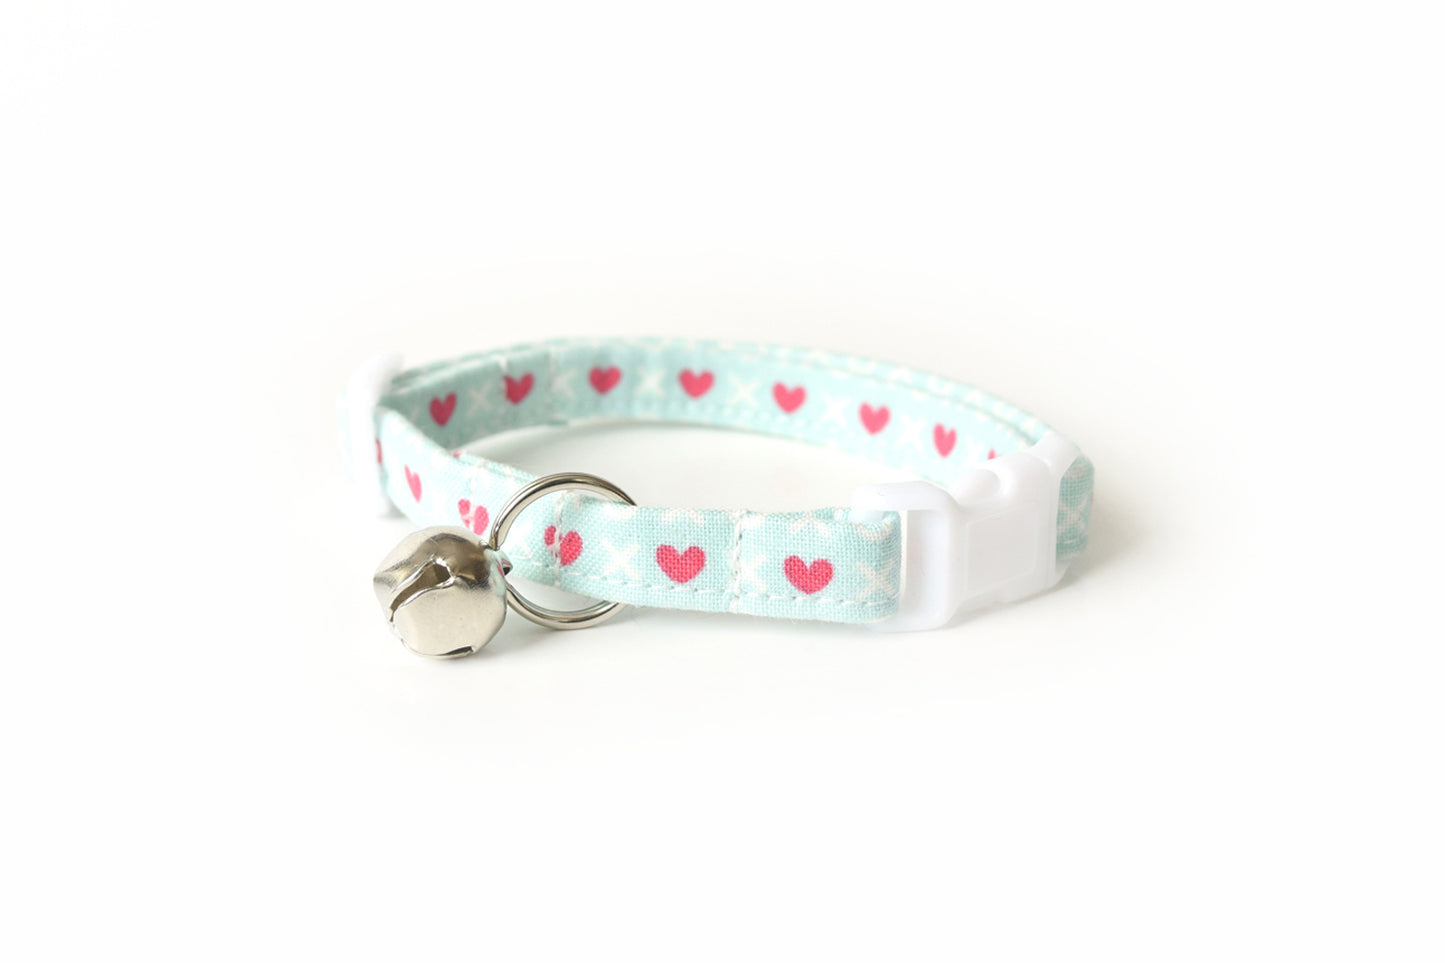 Mint Seafoam Cat Collar - Seafoam Green with Pink Hearts - Valentine's Day Cat Collar - Breakaway Cat Collar - Handmade by Kira's Pet Shop